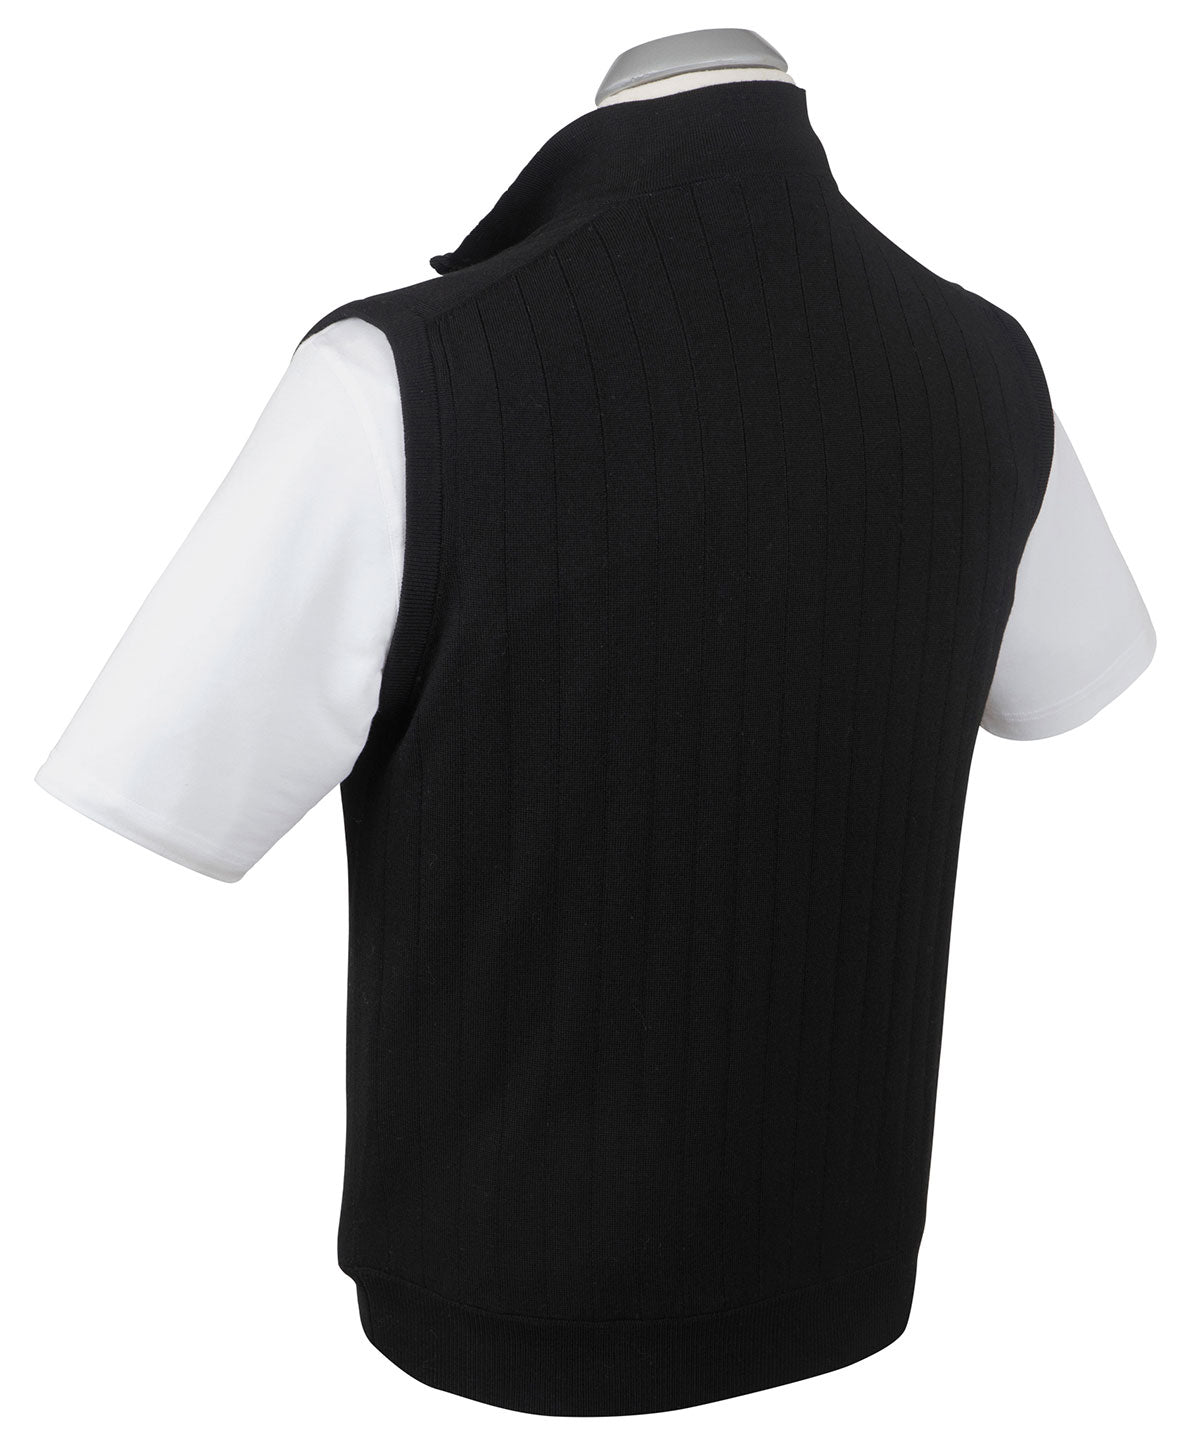 Signature Merino Lined Quarter-Zip Mock Neck Vest